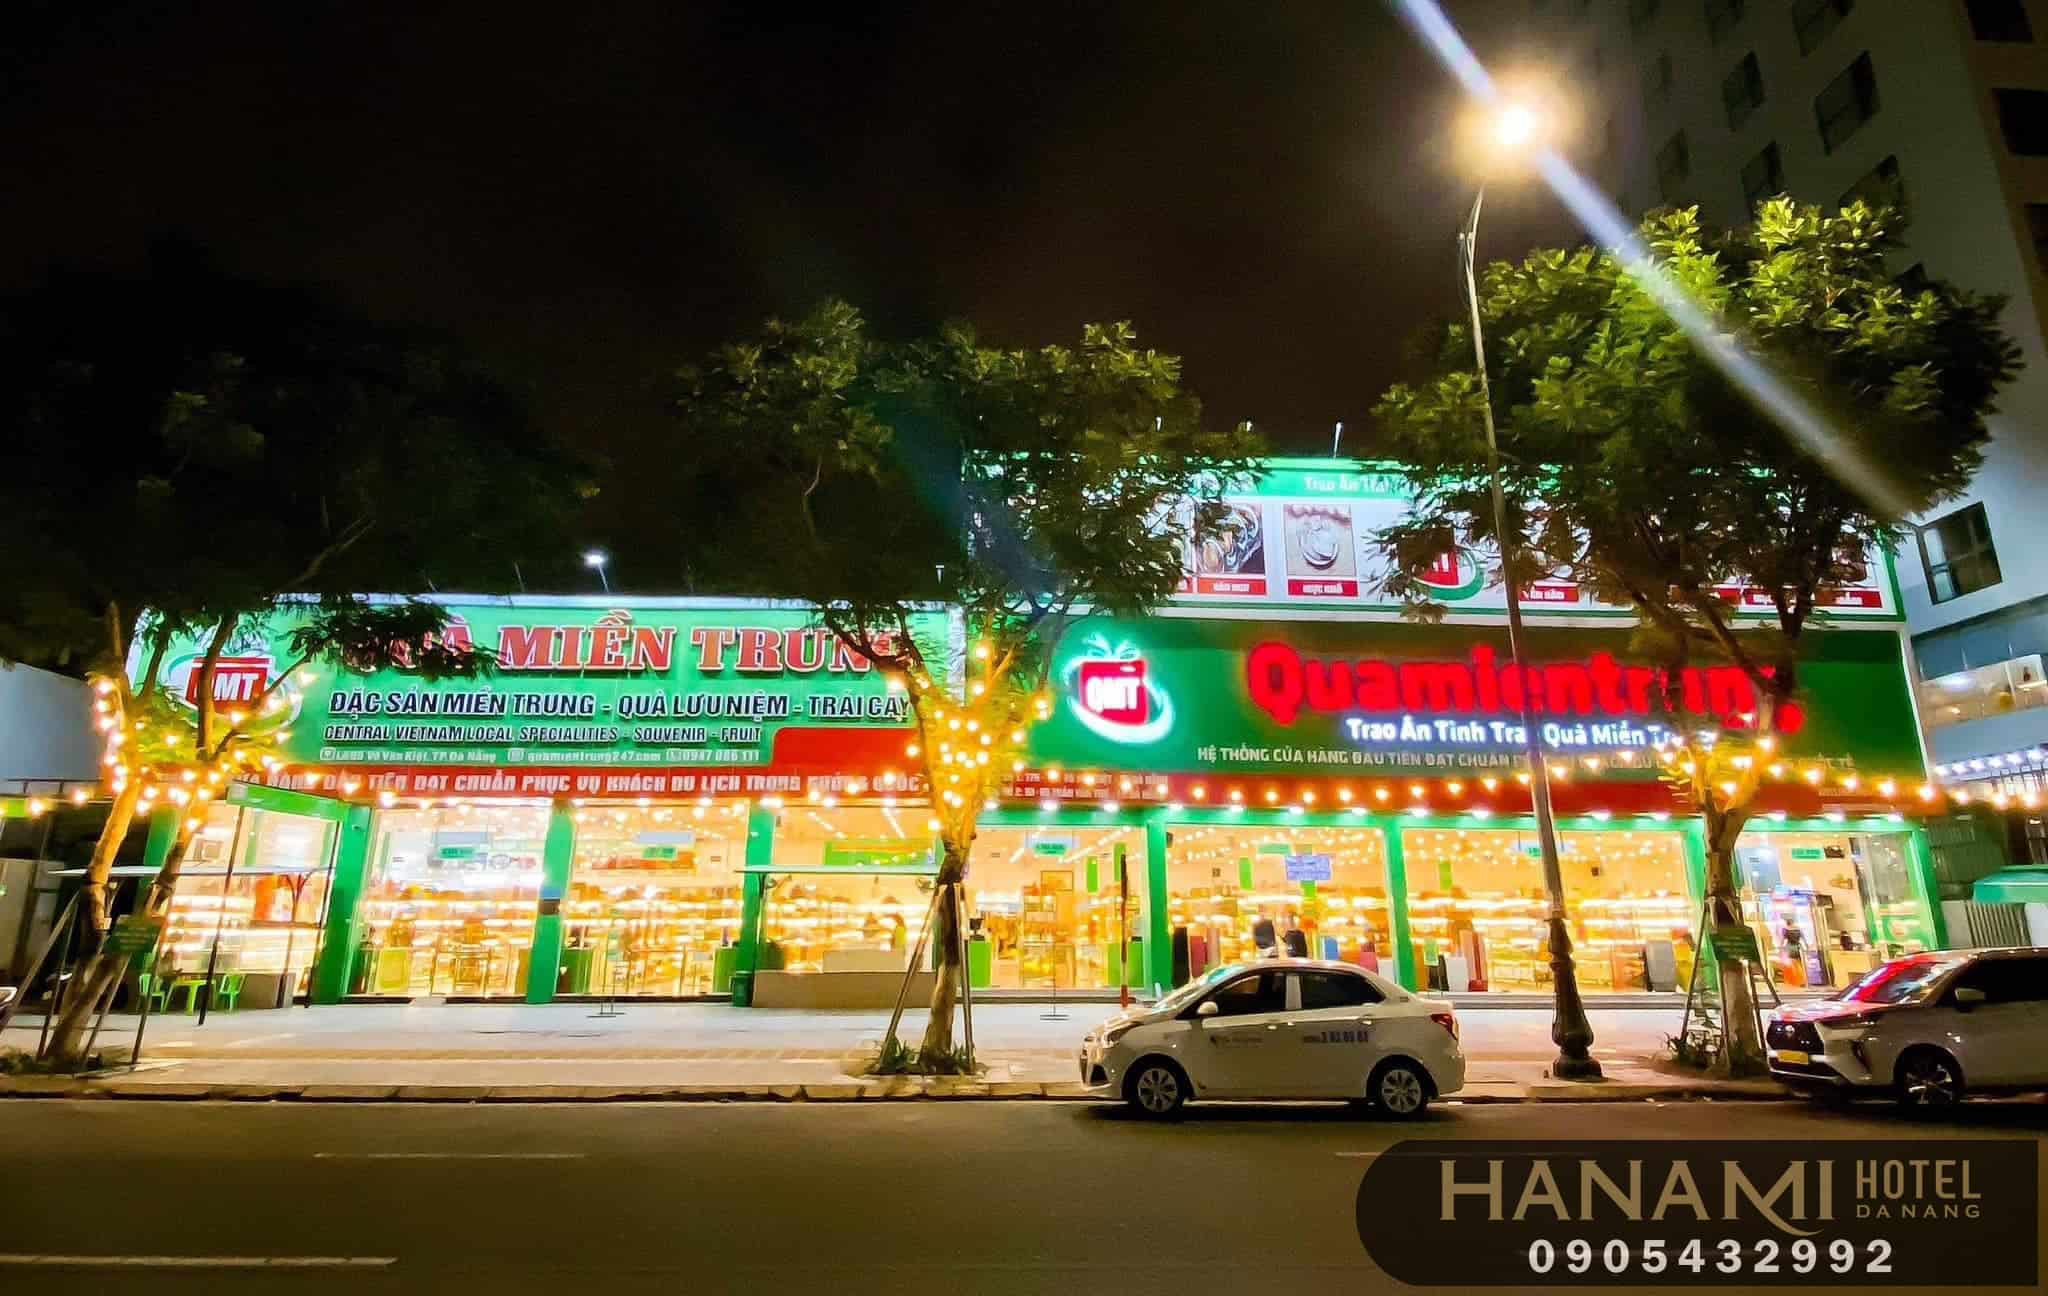 Best Specialty Store in Da Nang